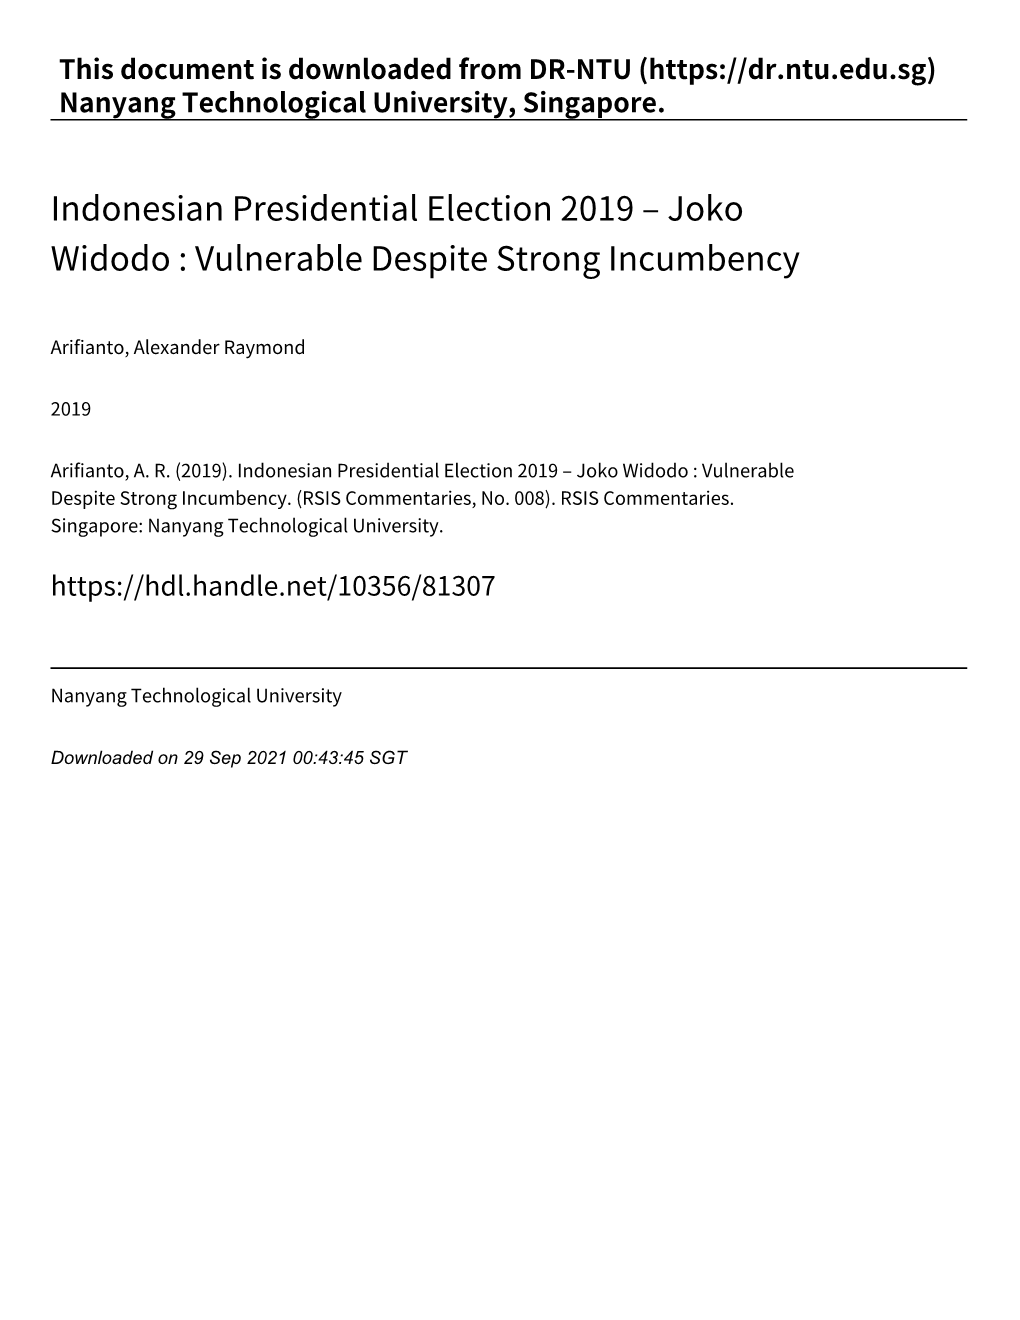 Indonesian Presidential Election 2019 – Joko Widodo : Vulnerable Despite Strong Incumbency